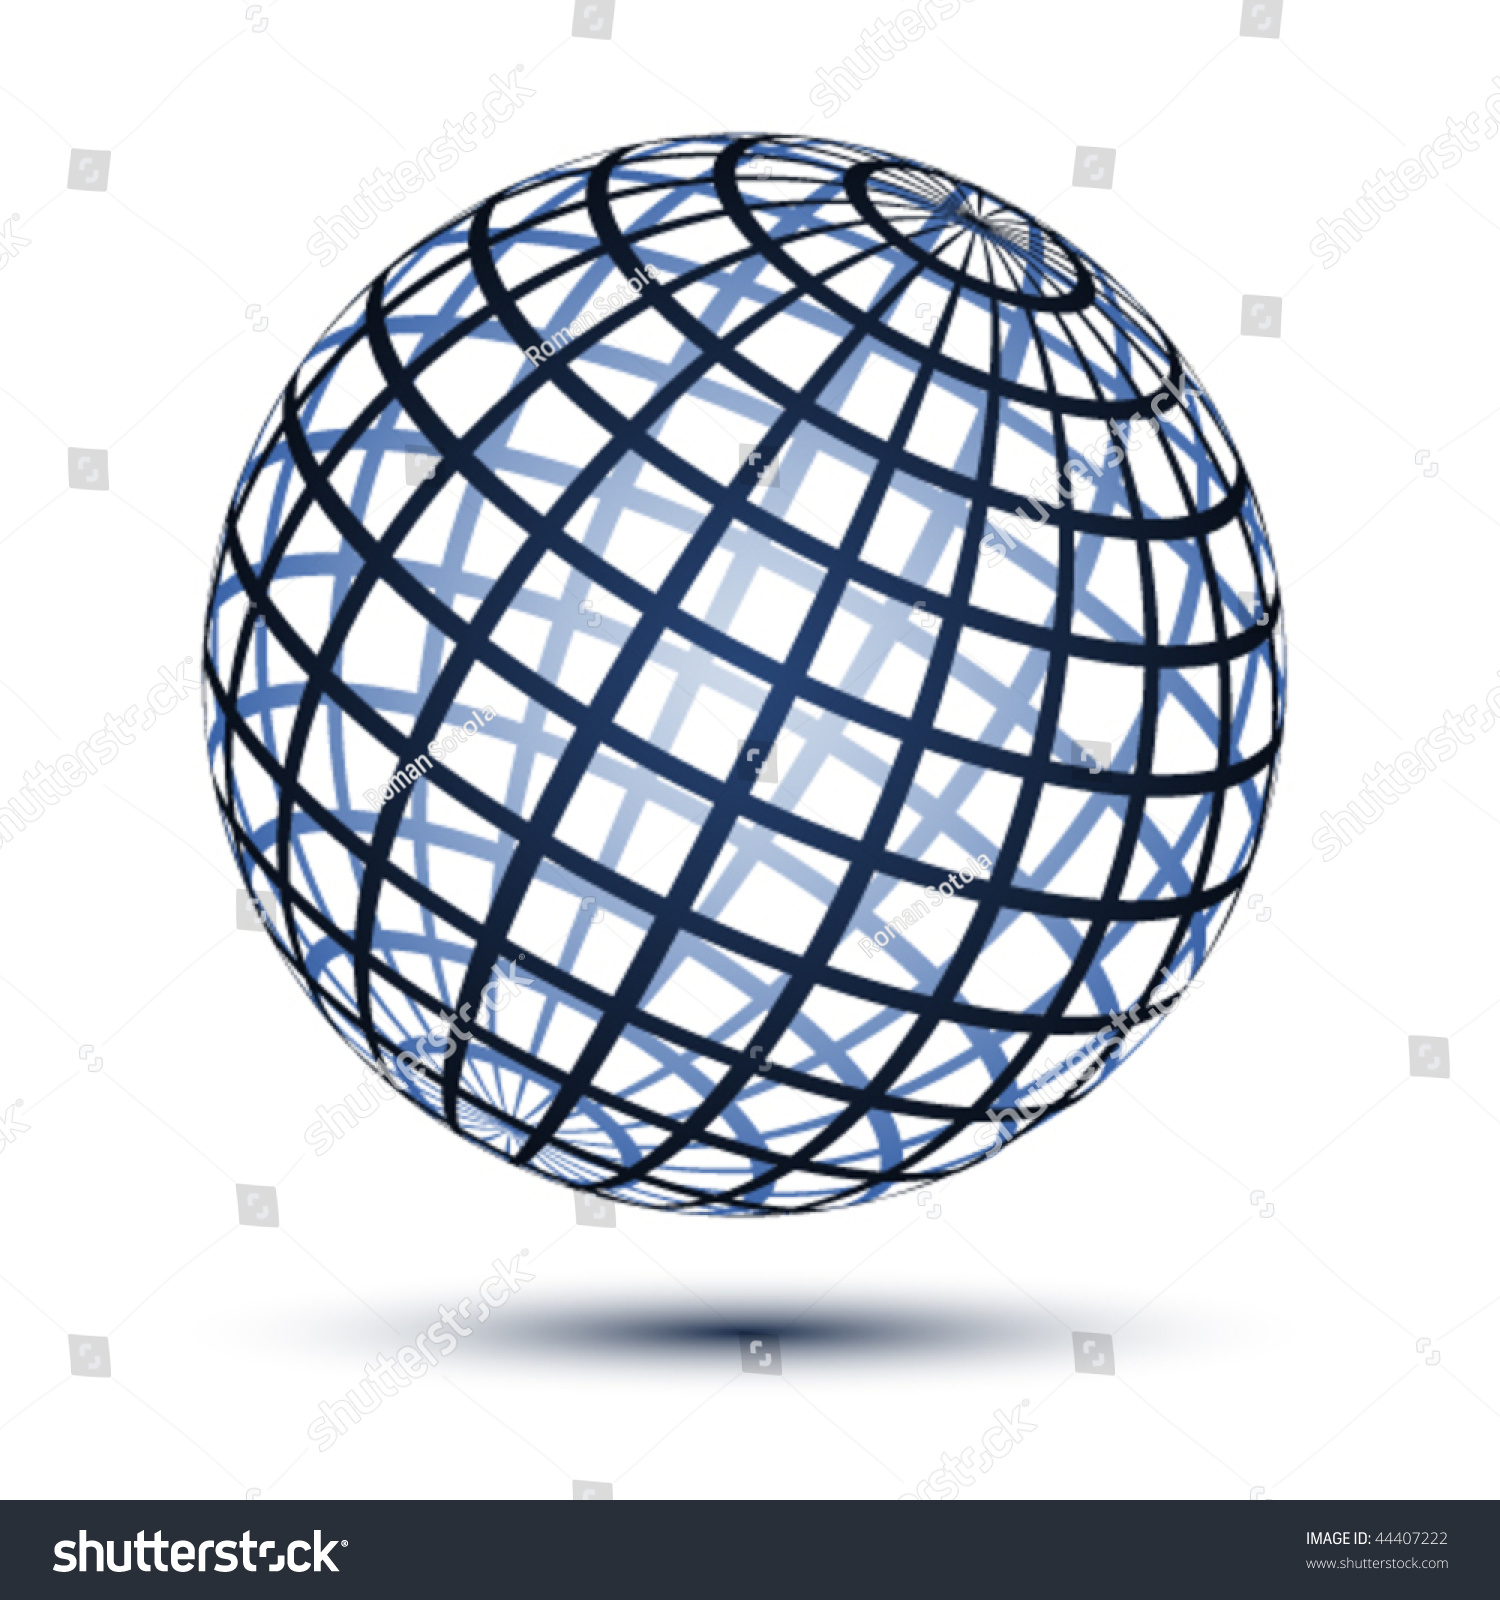 Vector Globe - 44407222 : Shutterstock